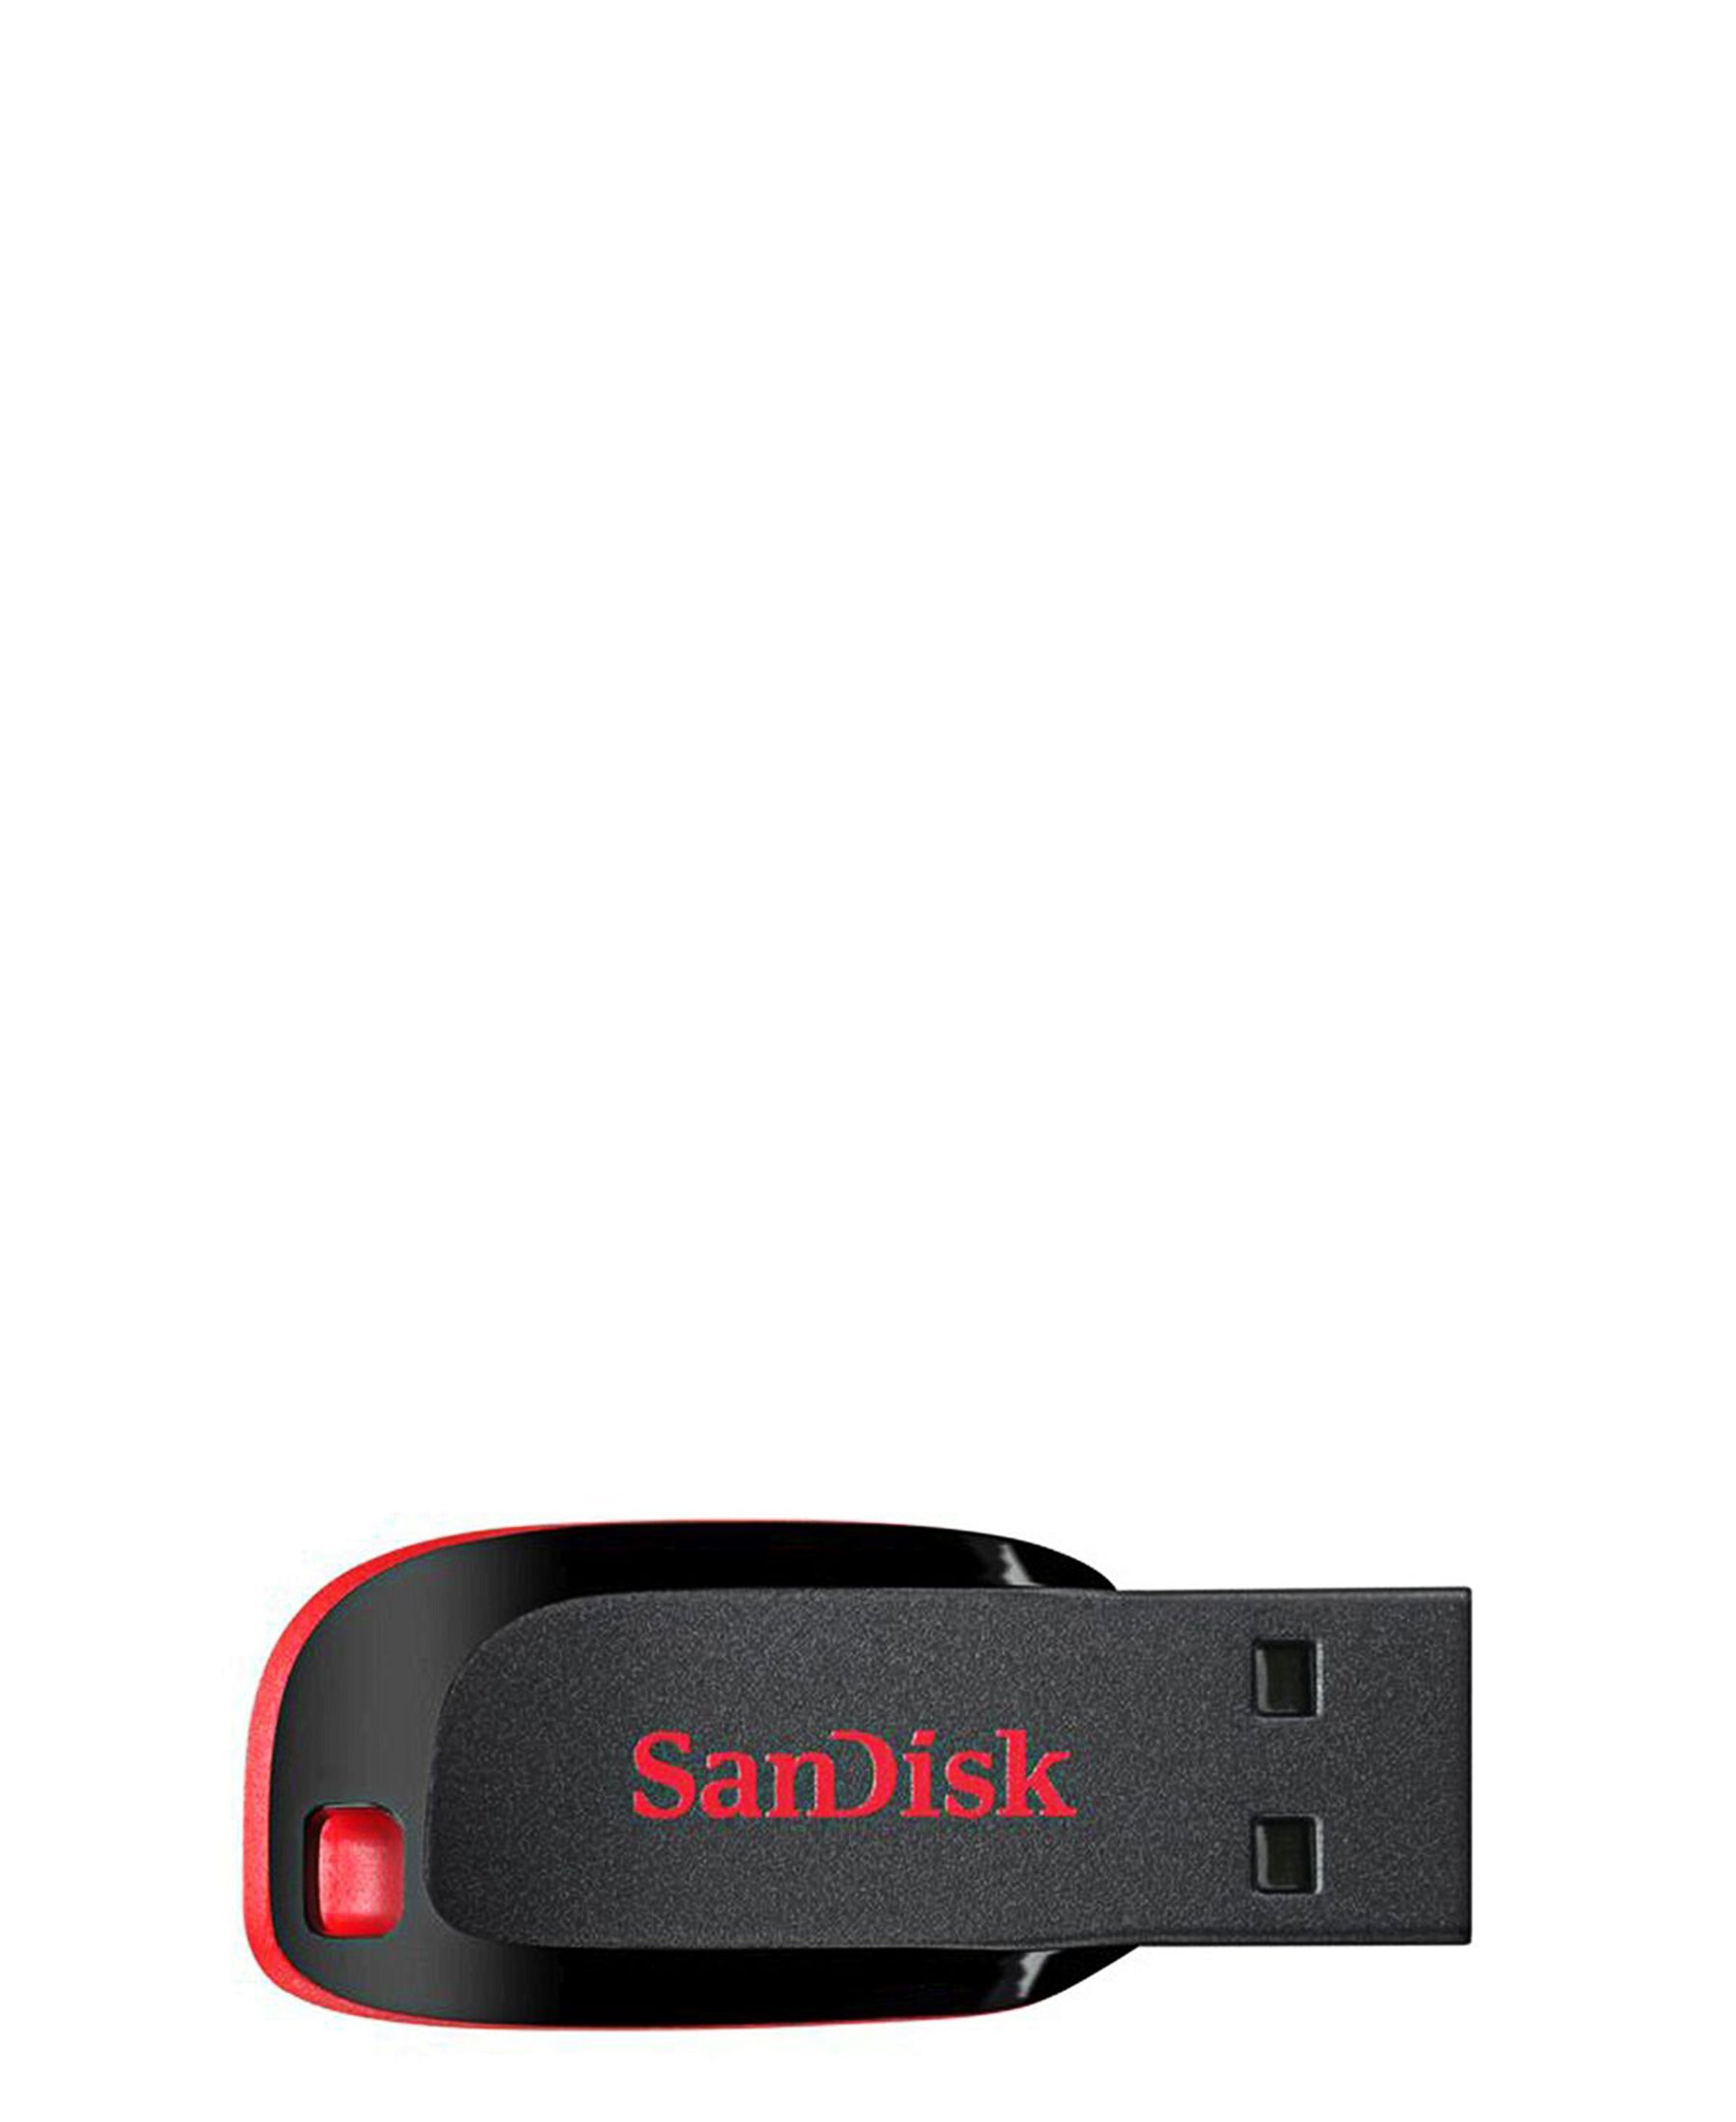 SanDisk 16GB Cruzer Blade USB Flash Drive - Red